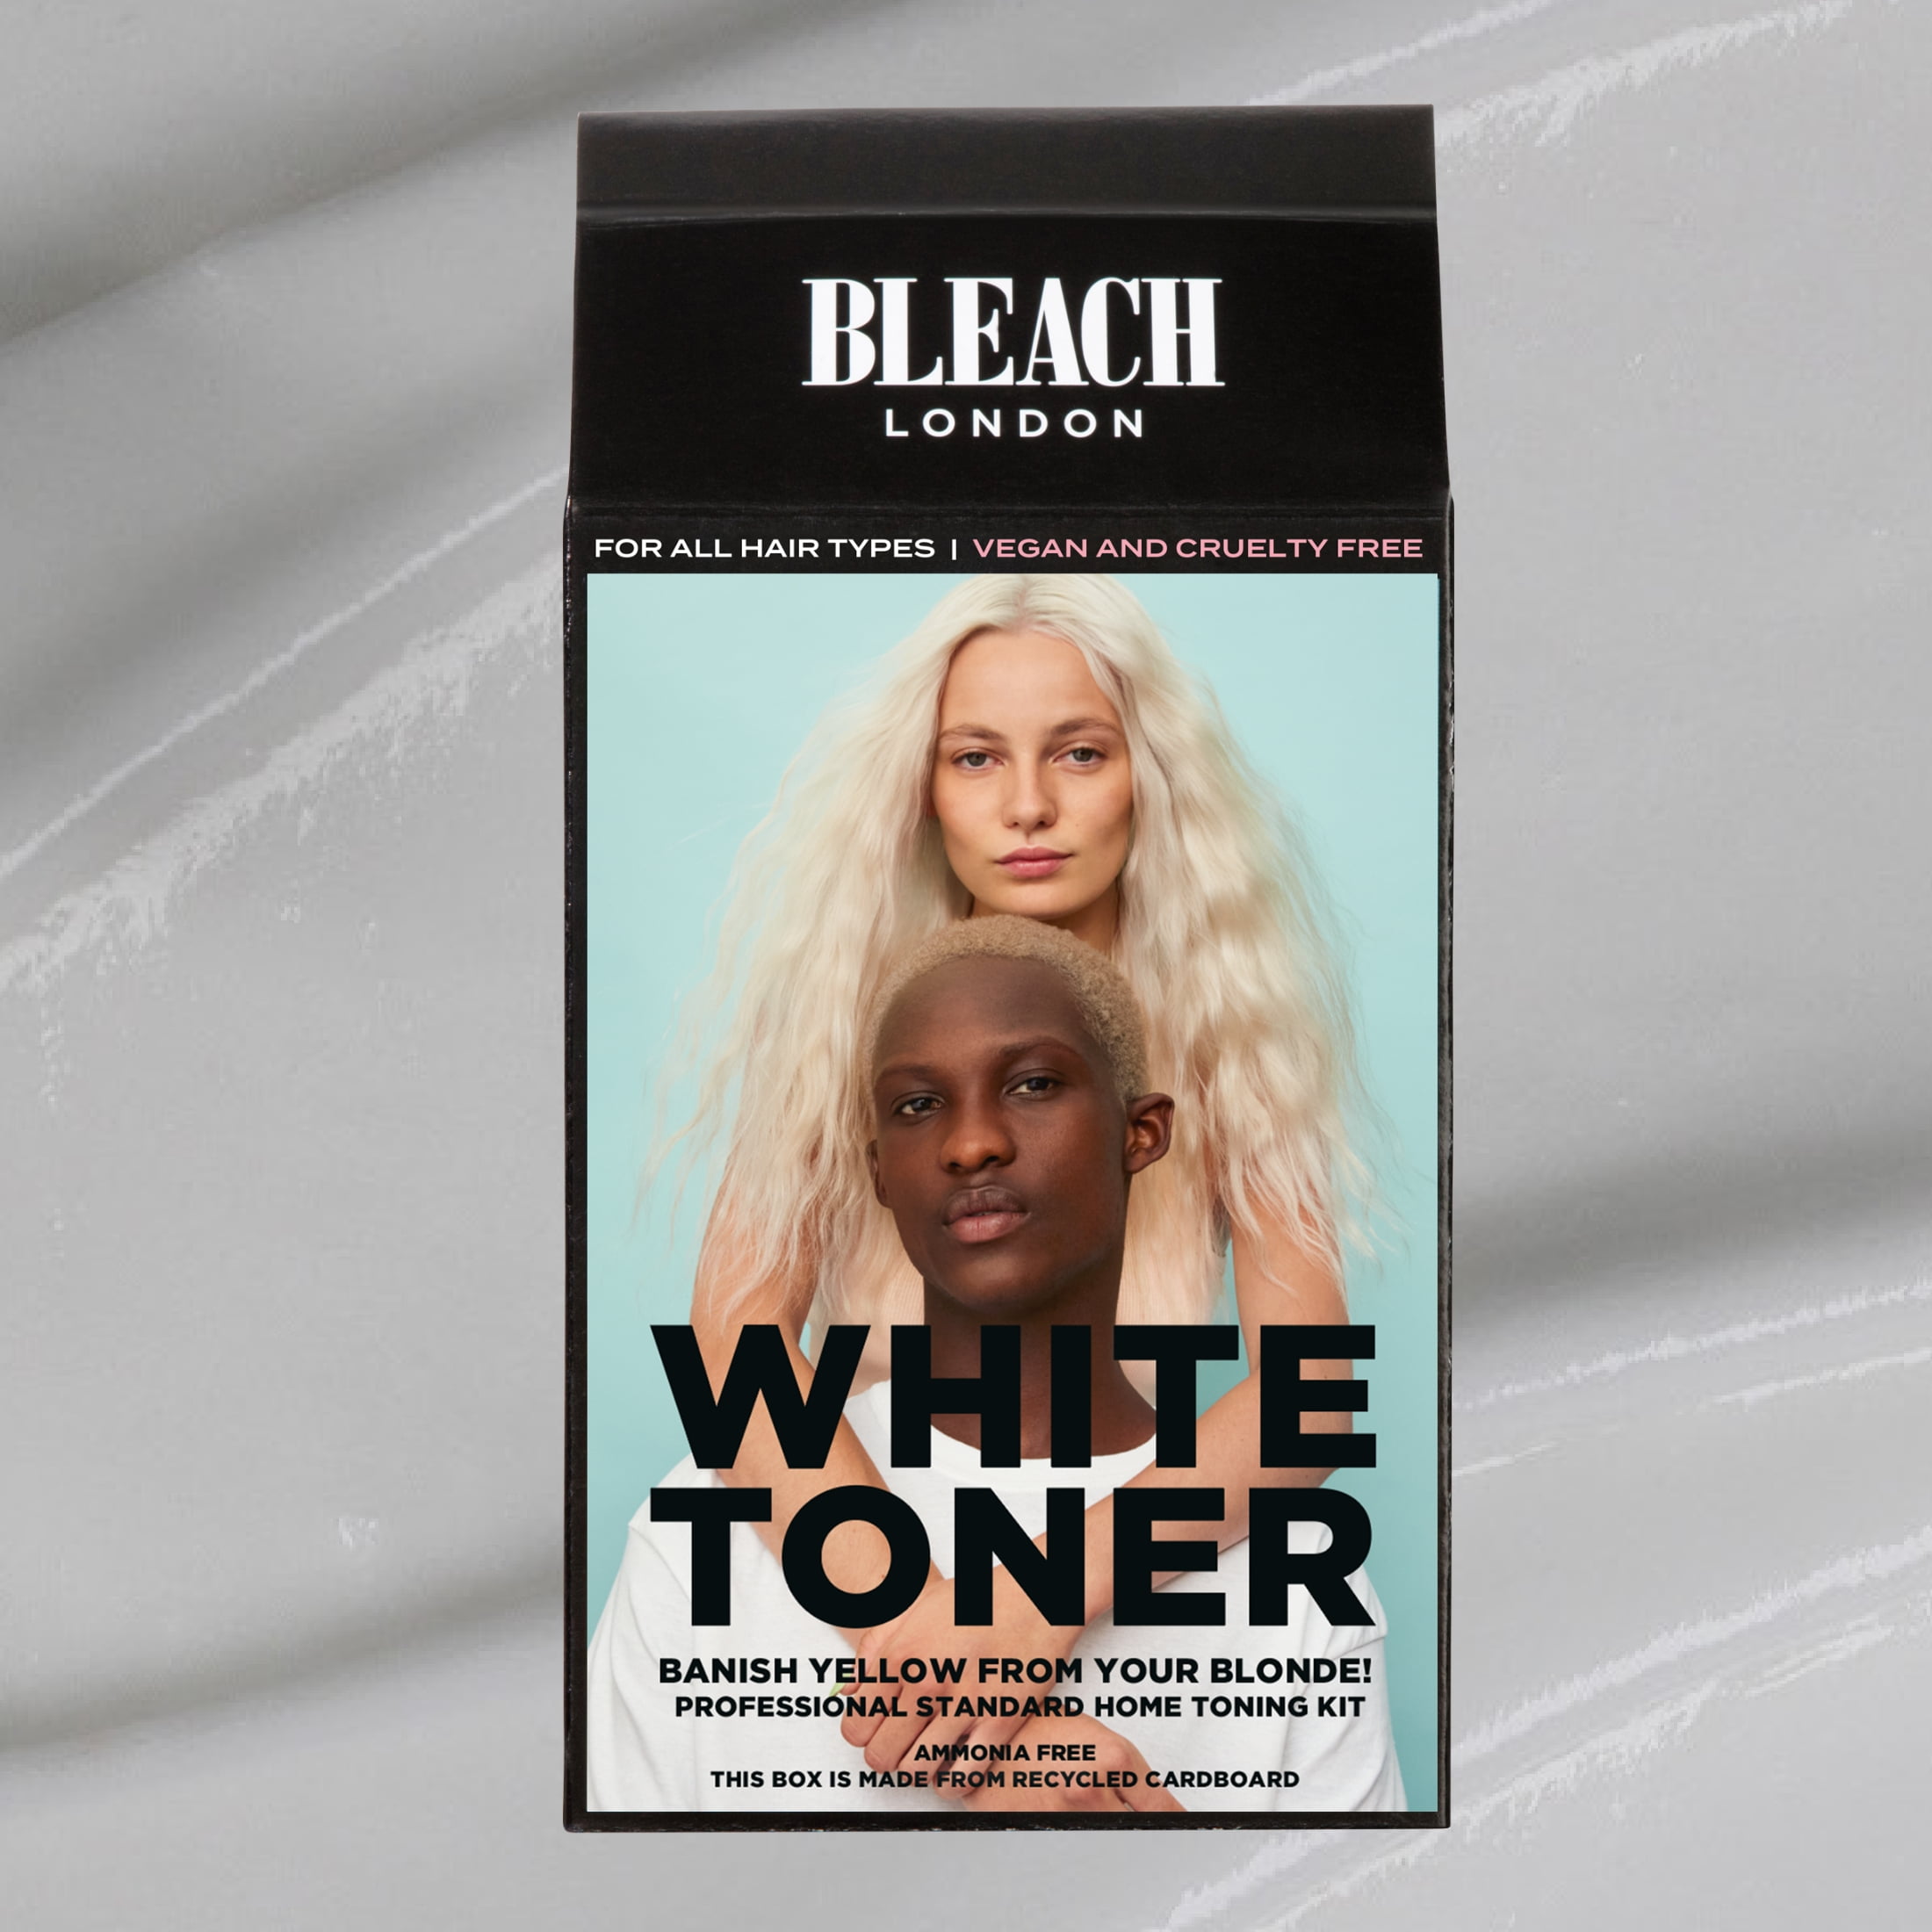 Bleach London Semi-Permanent Hair Toner Cream, White Toner,  oz -  